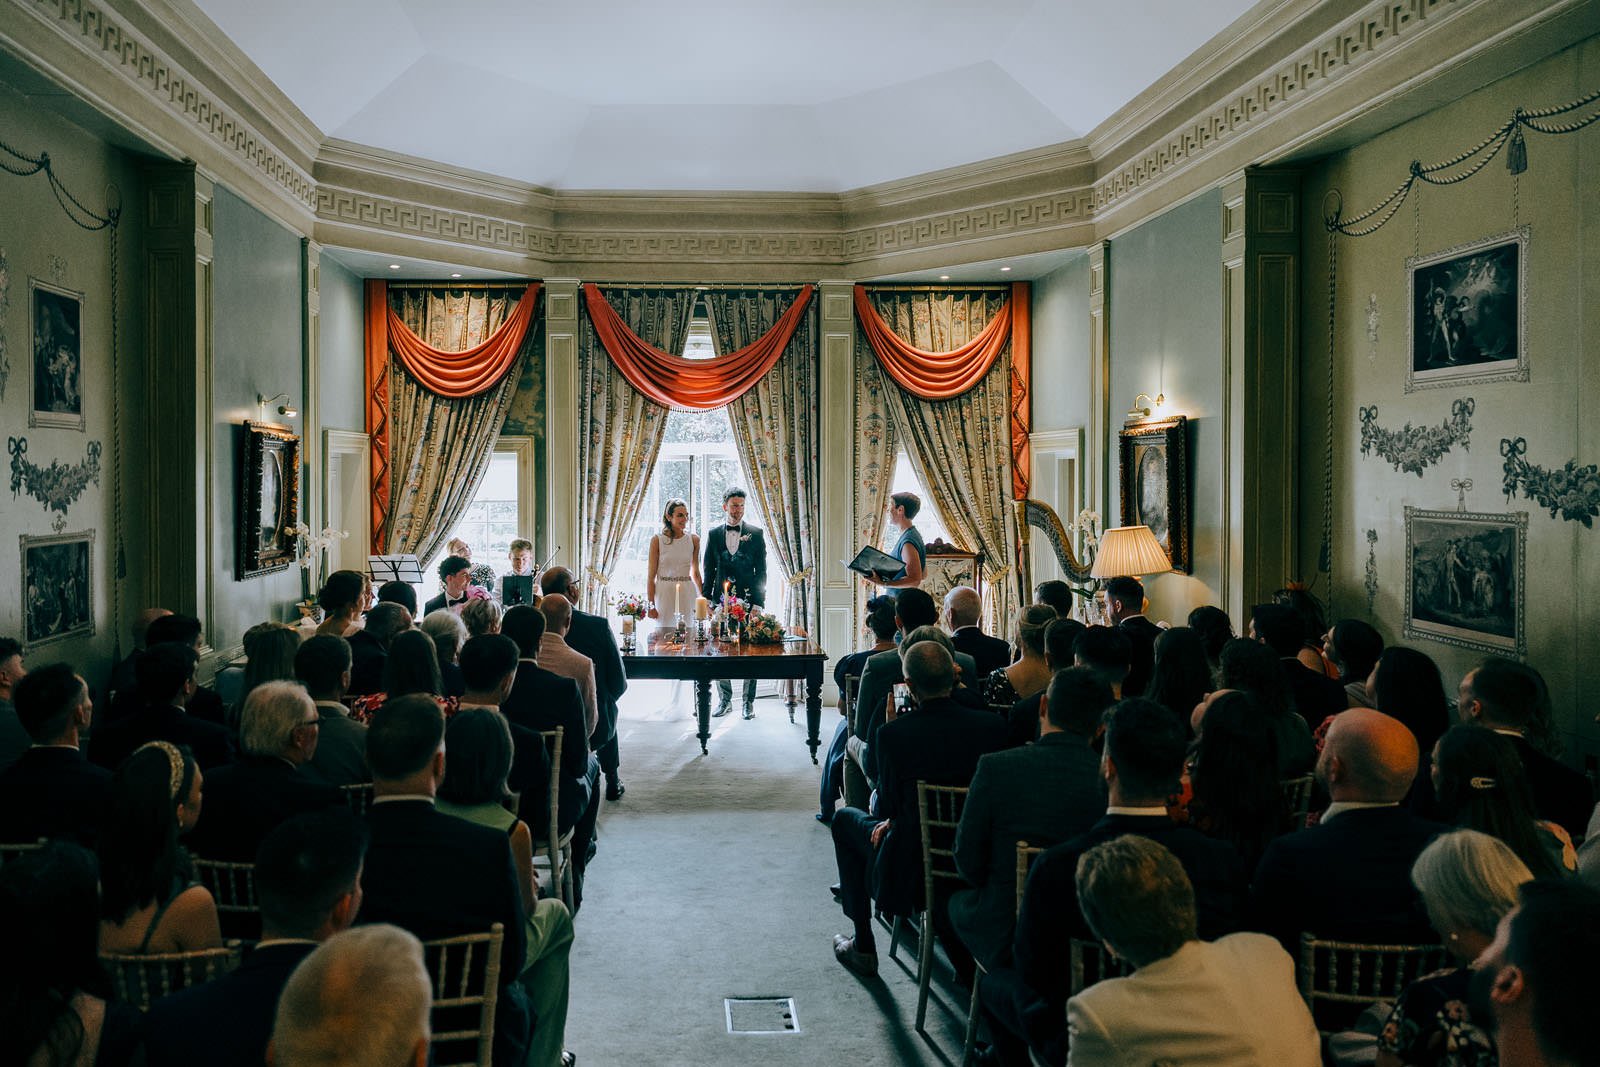 Marlfield_House-best-wedding-venues-Ireland-11.jpg